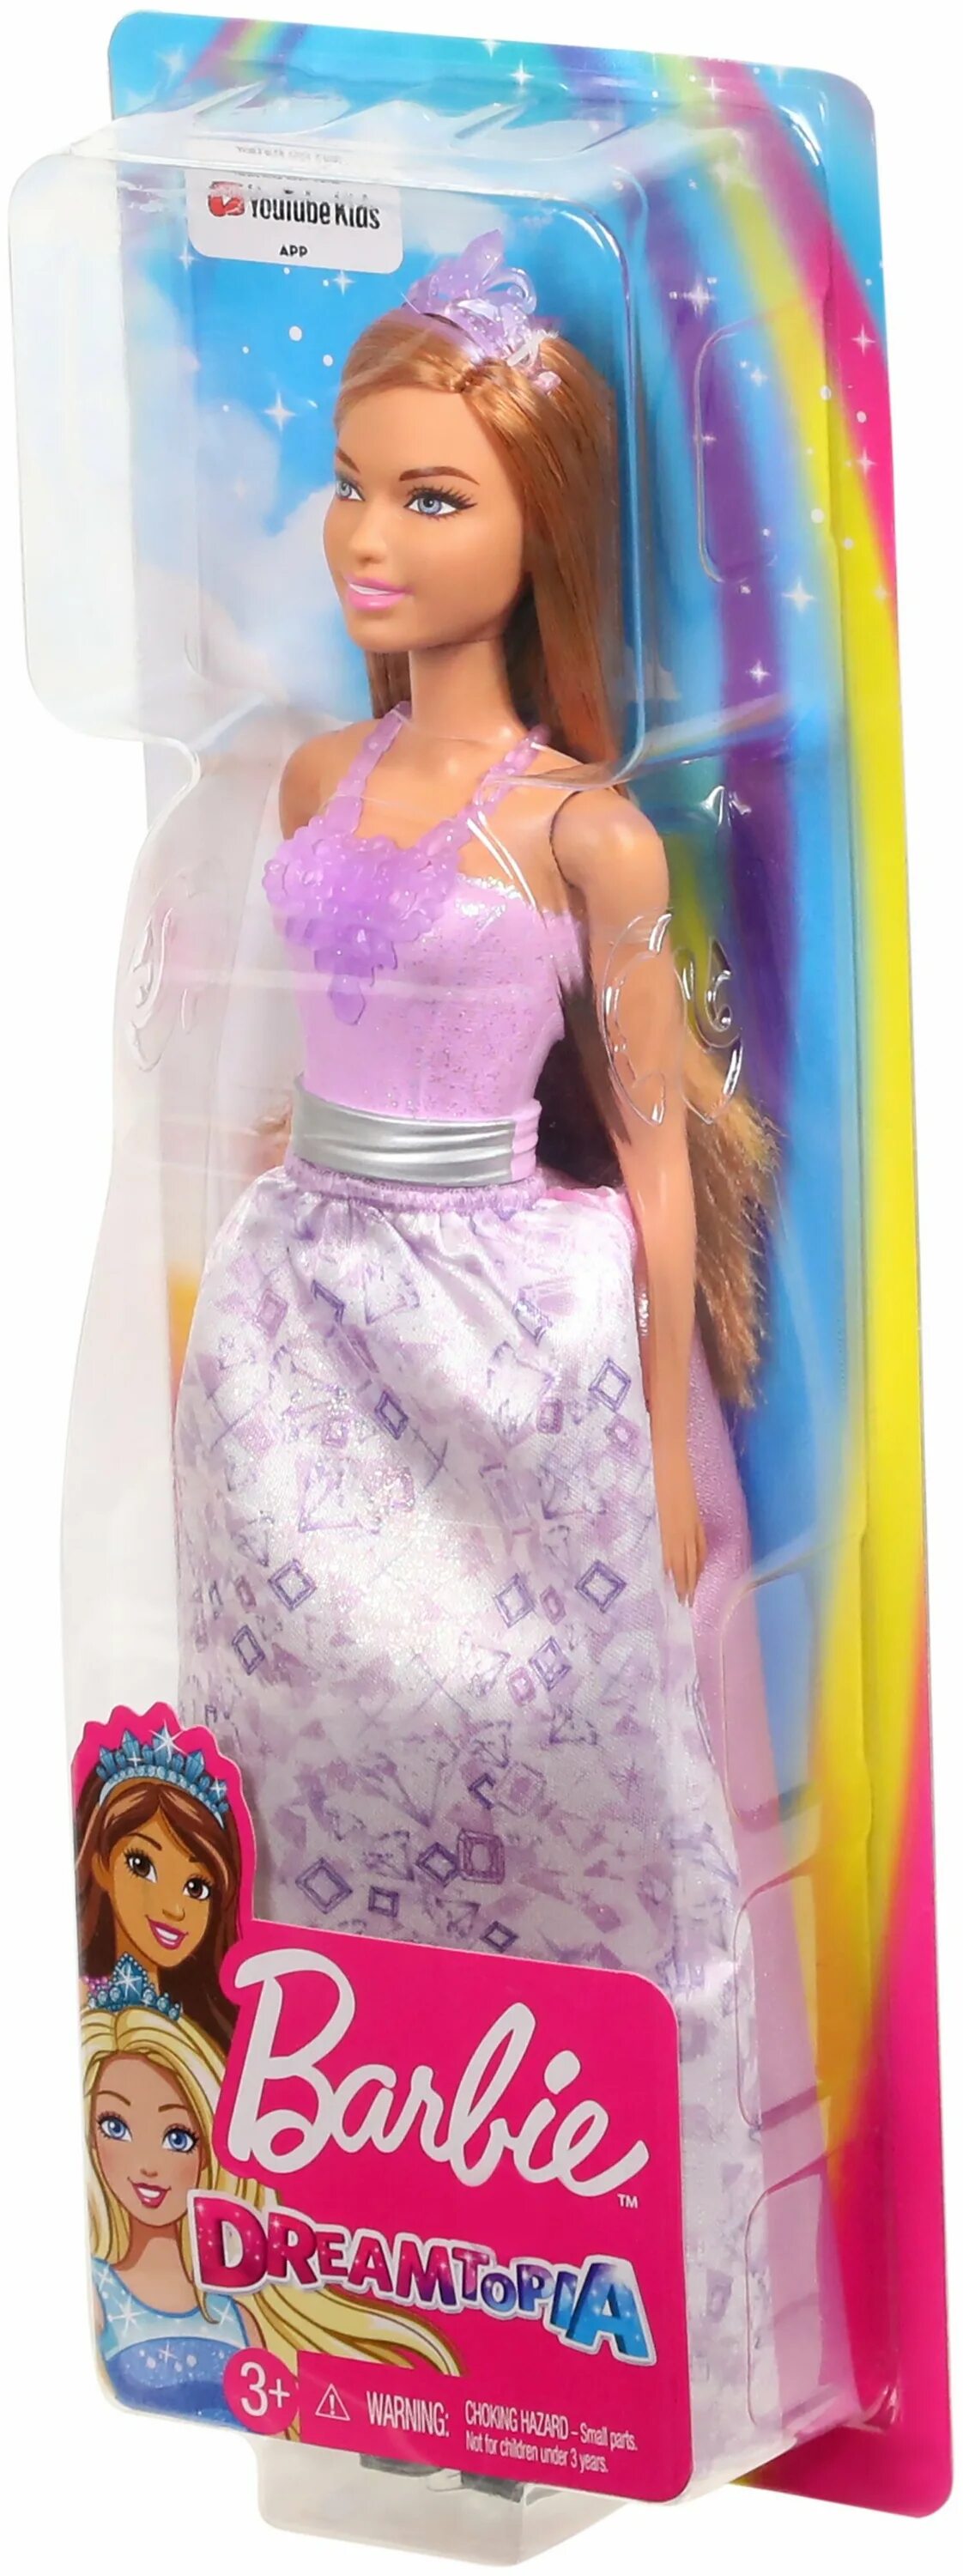 Принцессы 28. Кукла Barbie "волшебные принцессы", fxt13/fxt15. Кукла Barbie Dreamtopia принцесса с русыми волосами fxt15. Кукла Mattel Barbie fxt13. Barbie Jewel Princess.